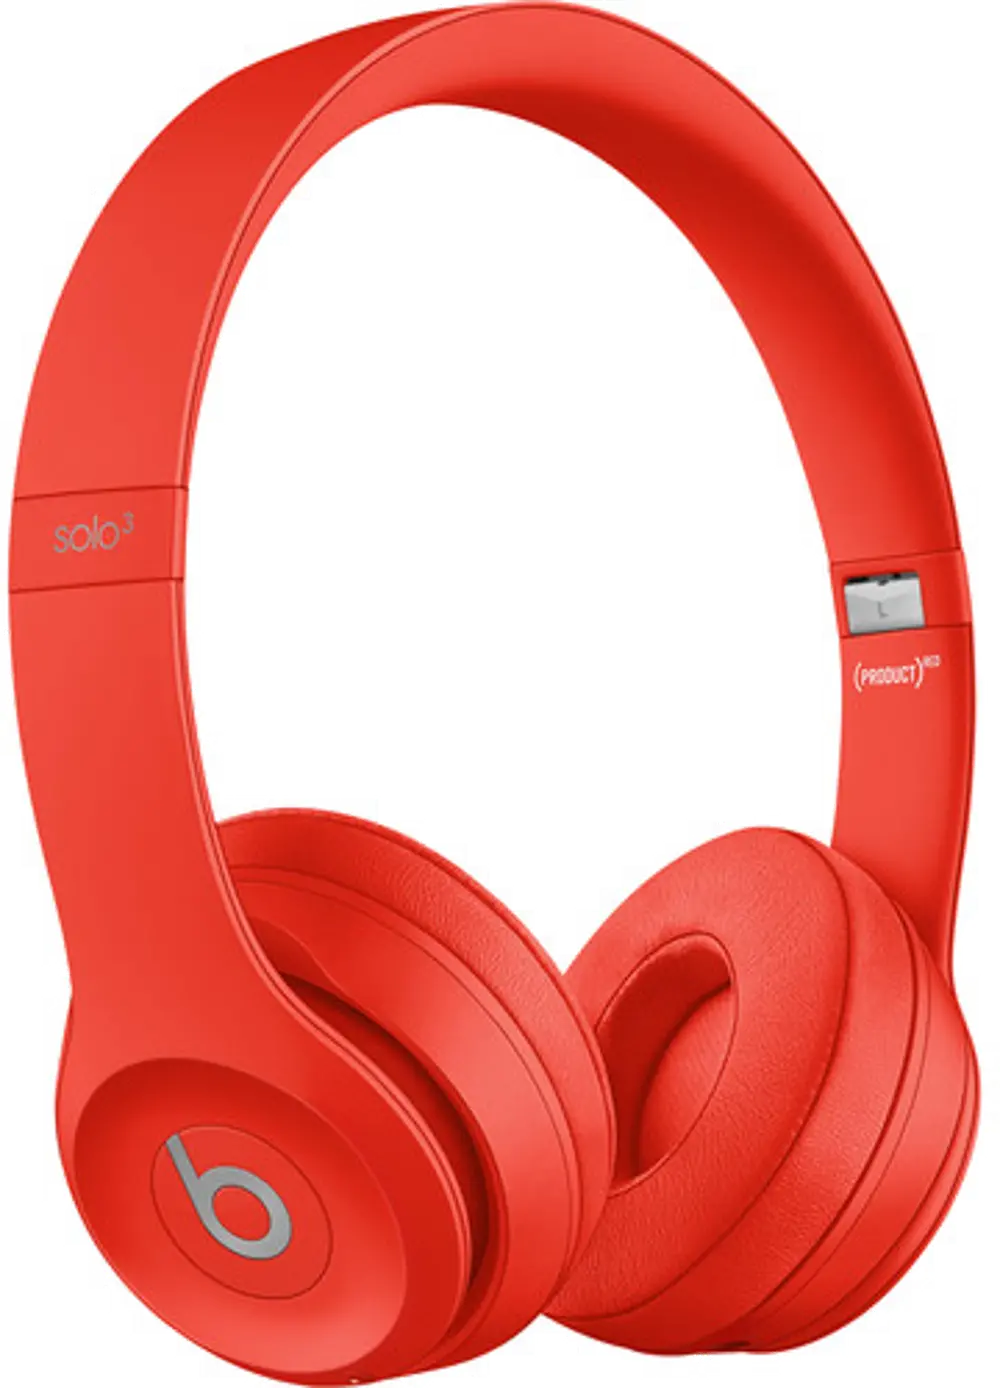 MX472LL/A Beats Solo 3 Wireless On-Ear Headphones - Citrus Red-1